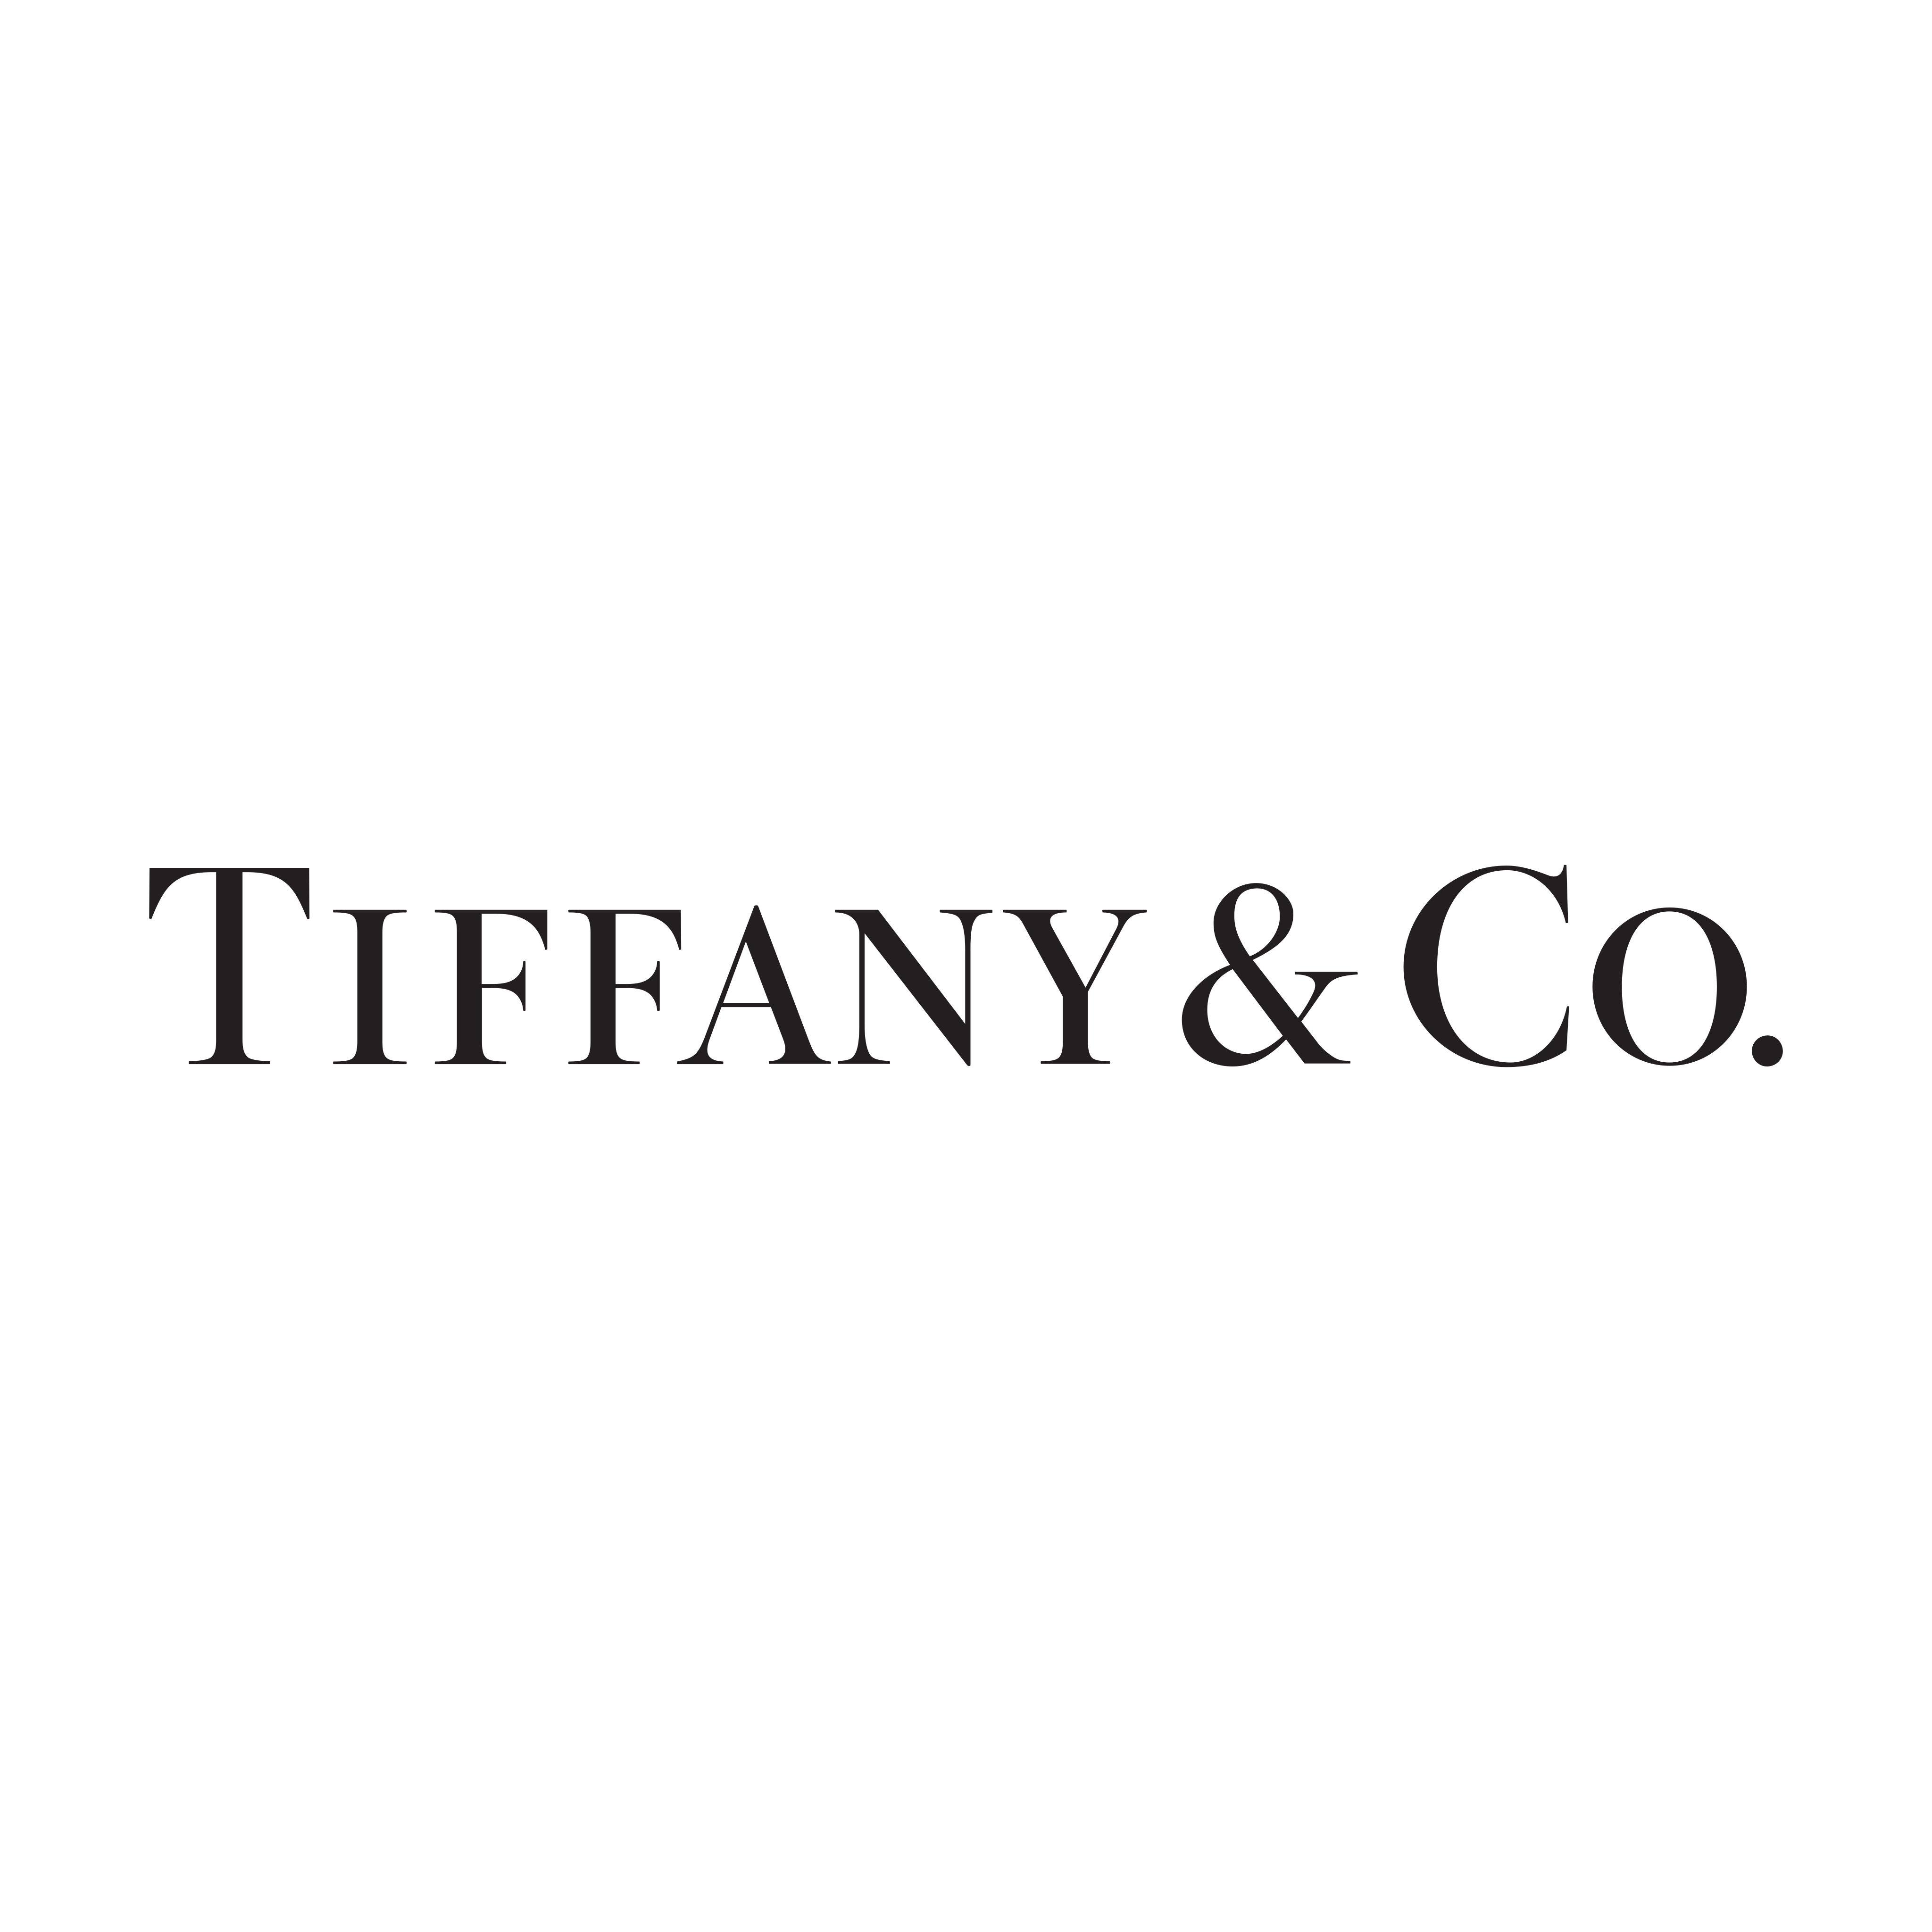 Tiffany & Co. Logo PNG.